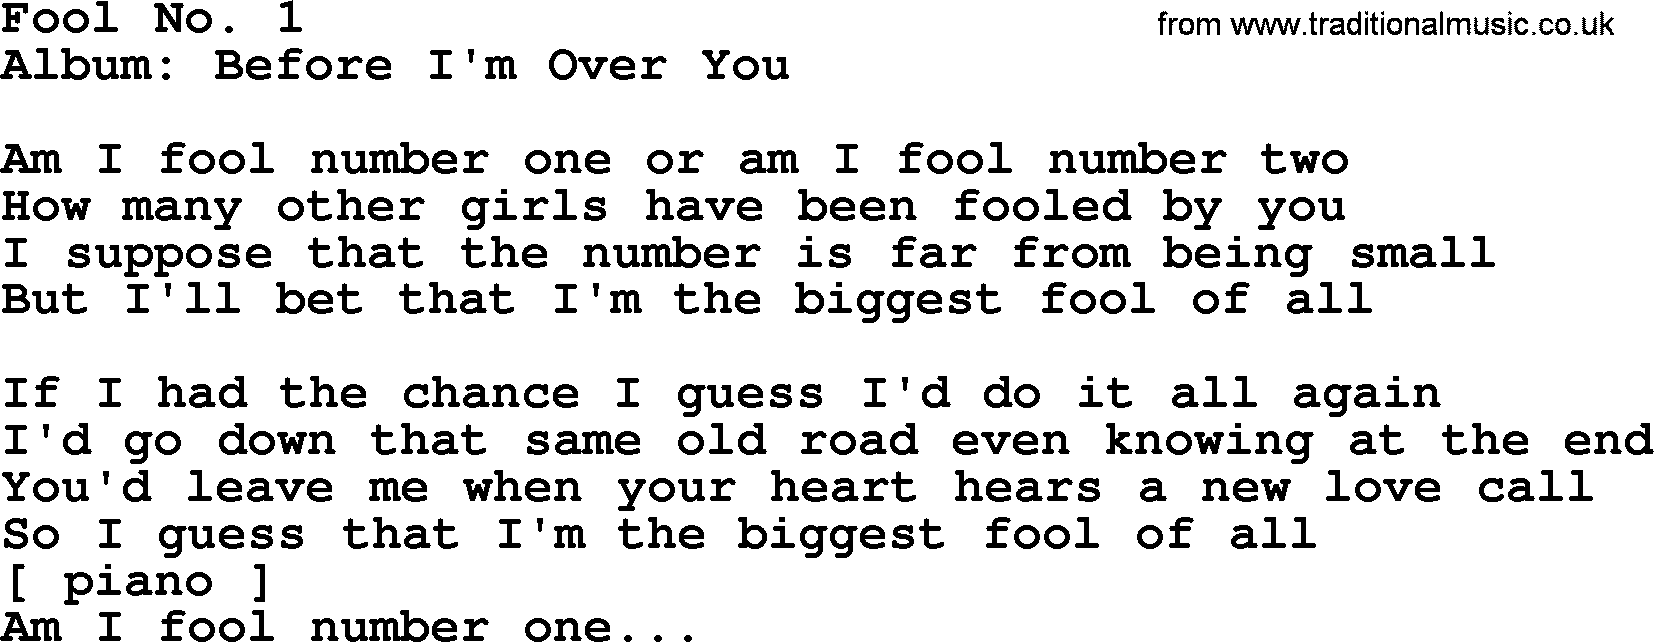 Loretta Lynn song: Fool No. 1 lyrics